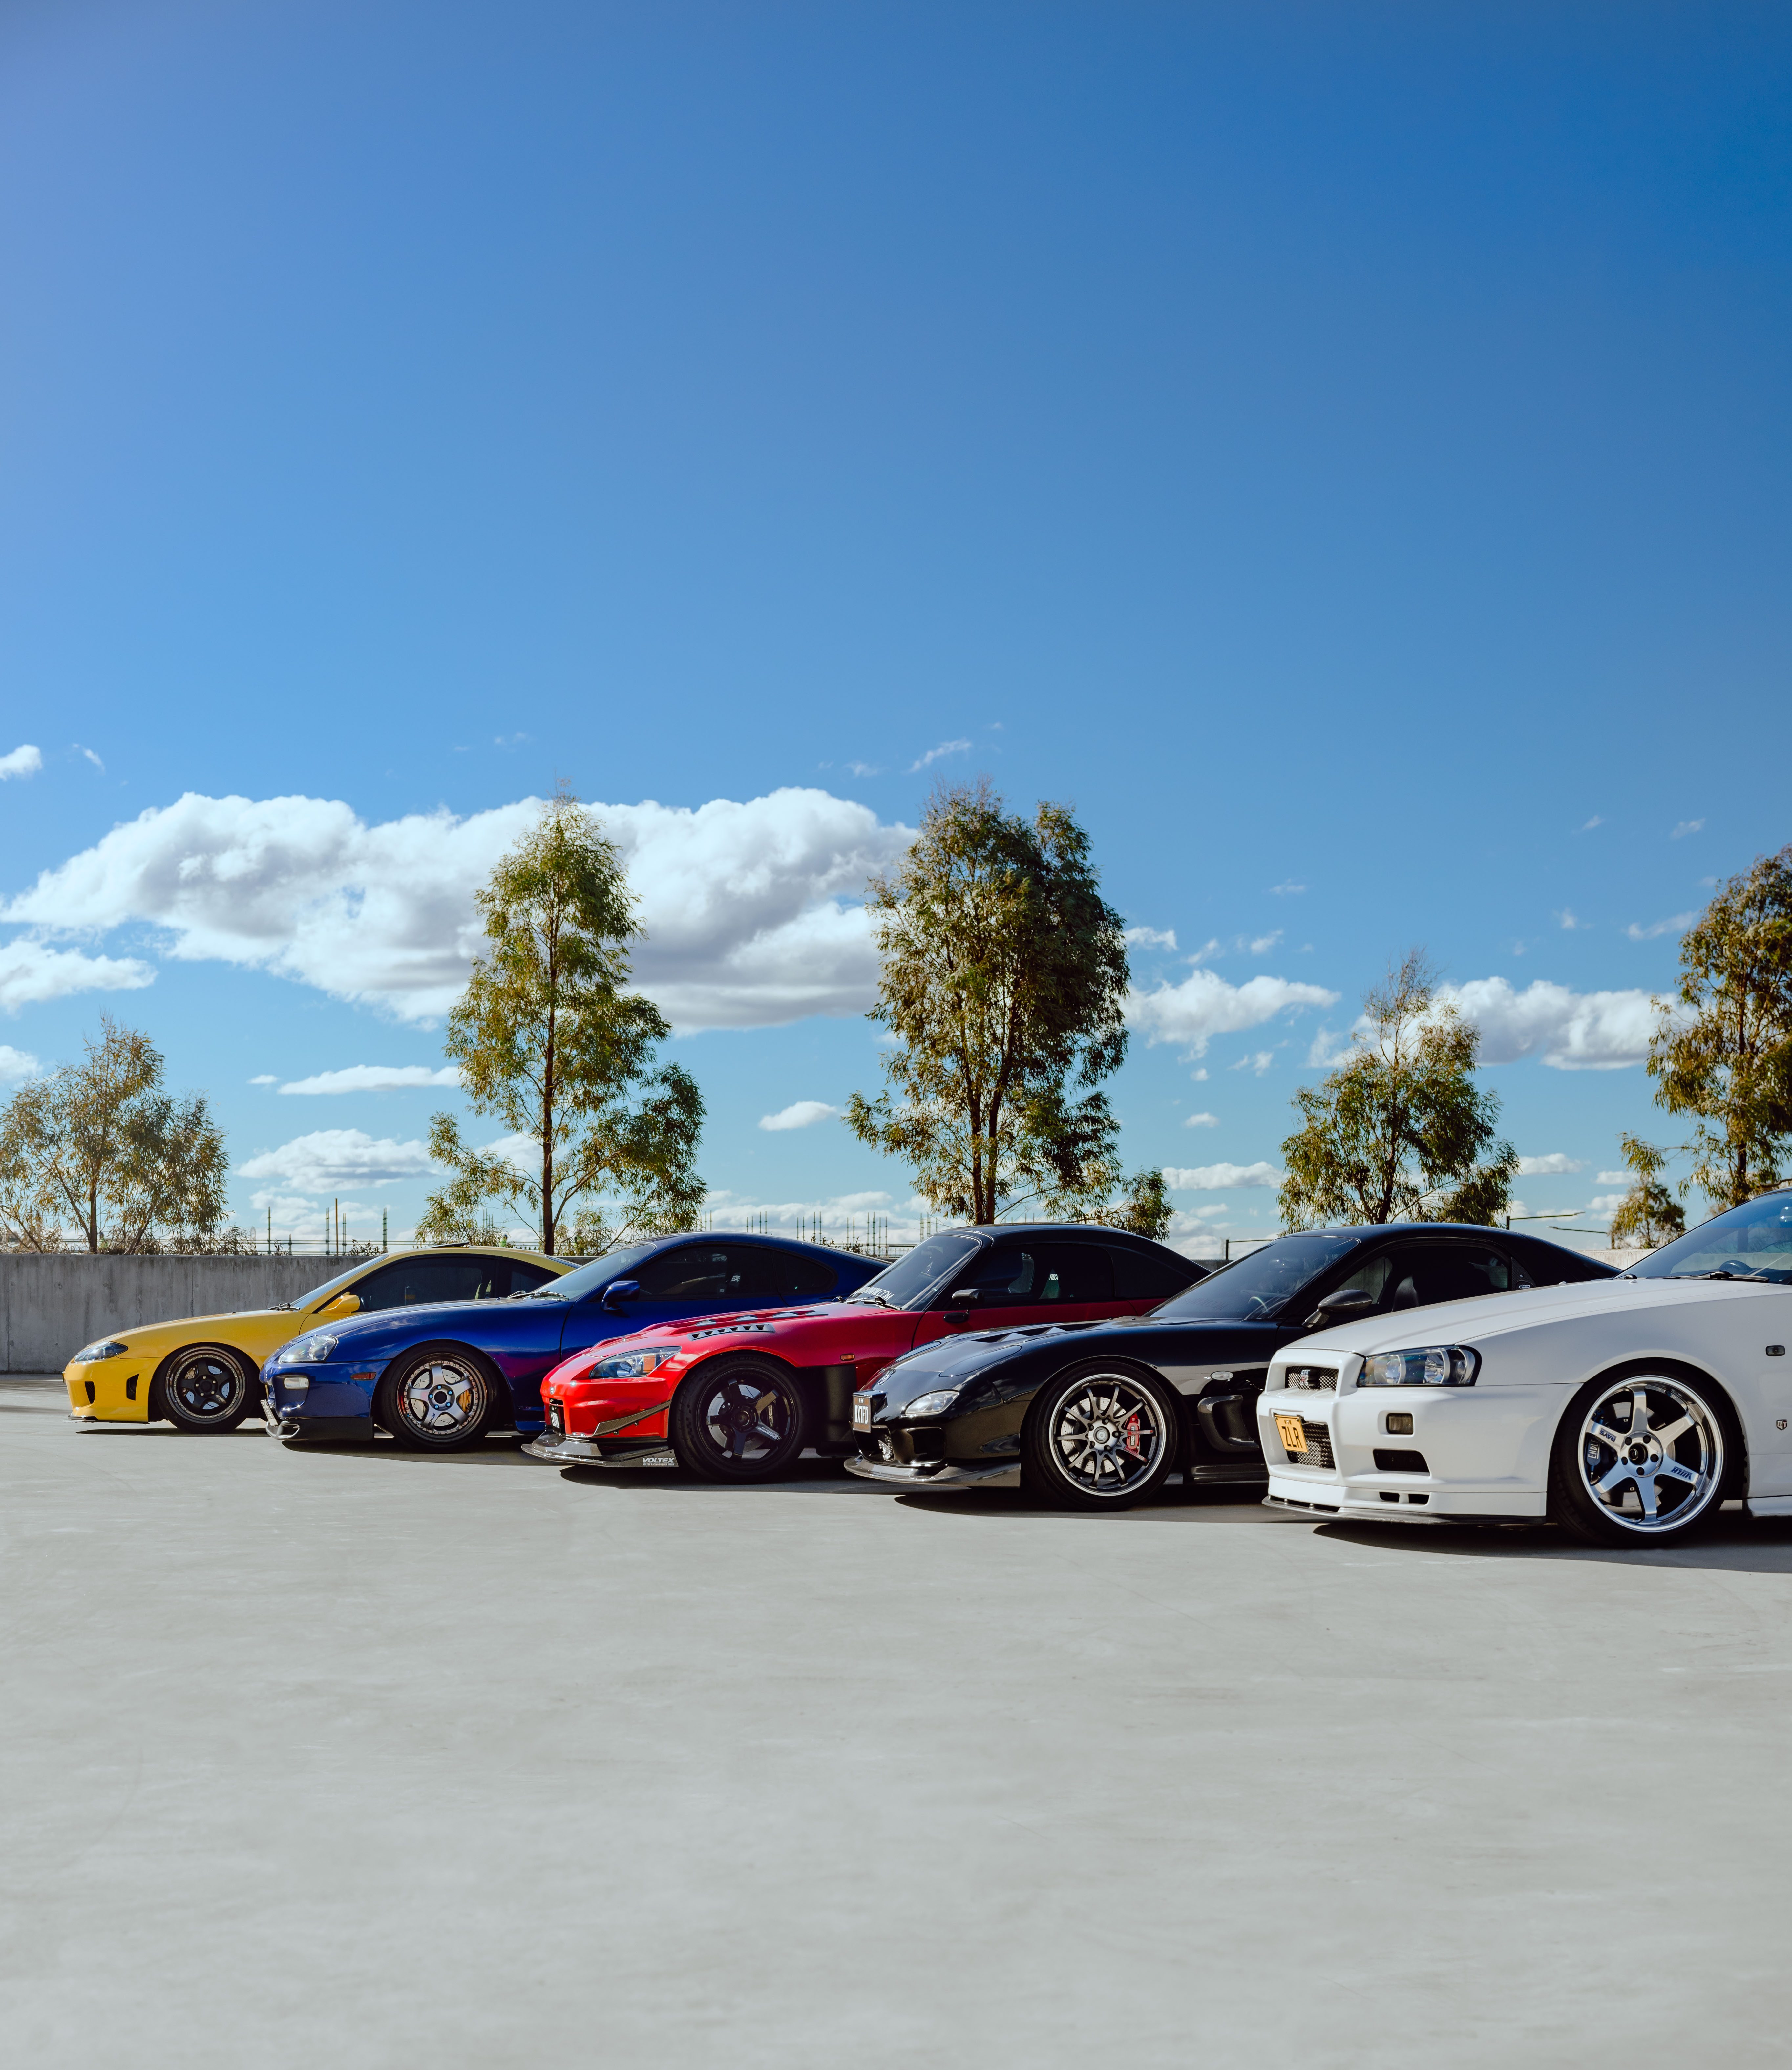 From left : Yellow Nissan Silva S15, Blue Toyota Supra MkIV, Red Honda S2000, Black Maxda RX7 FD, White Nissan Skyline R34 GTR